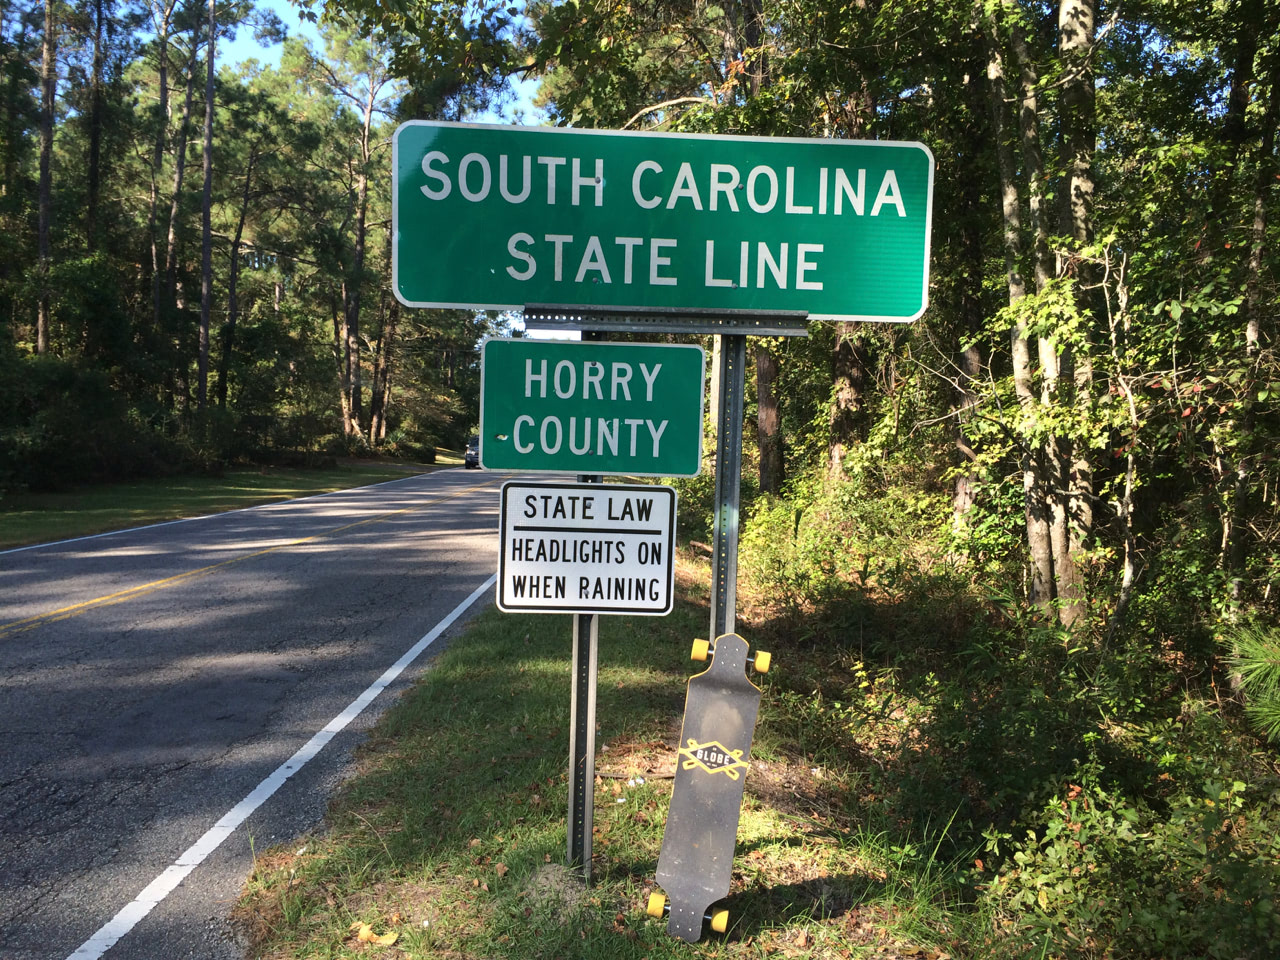 South Carolina state line